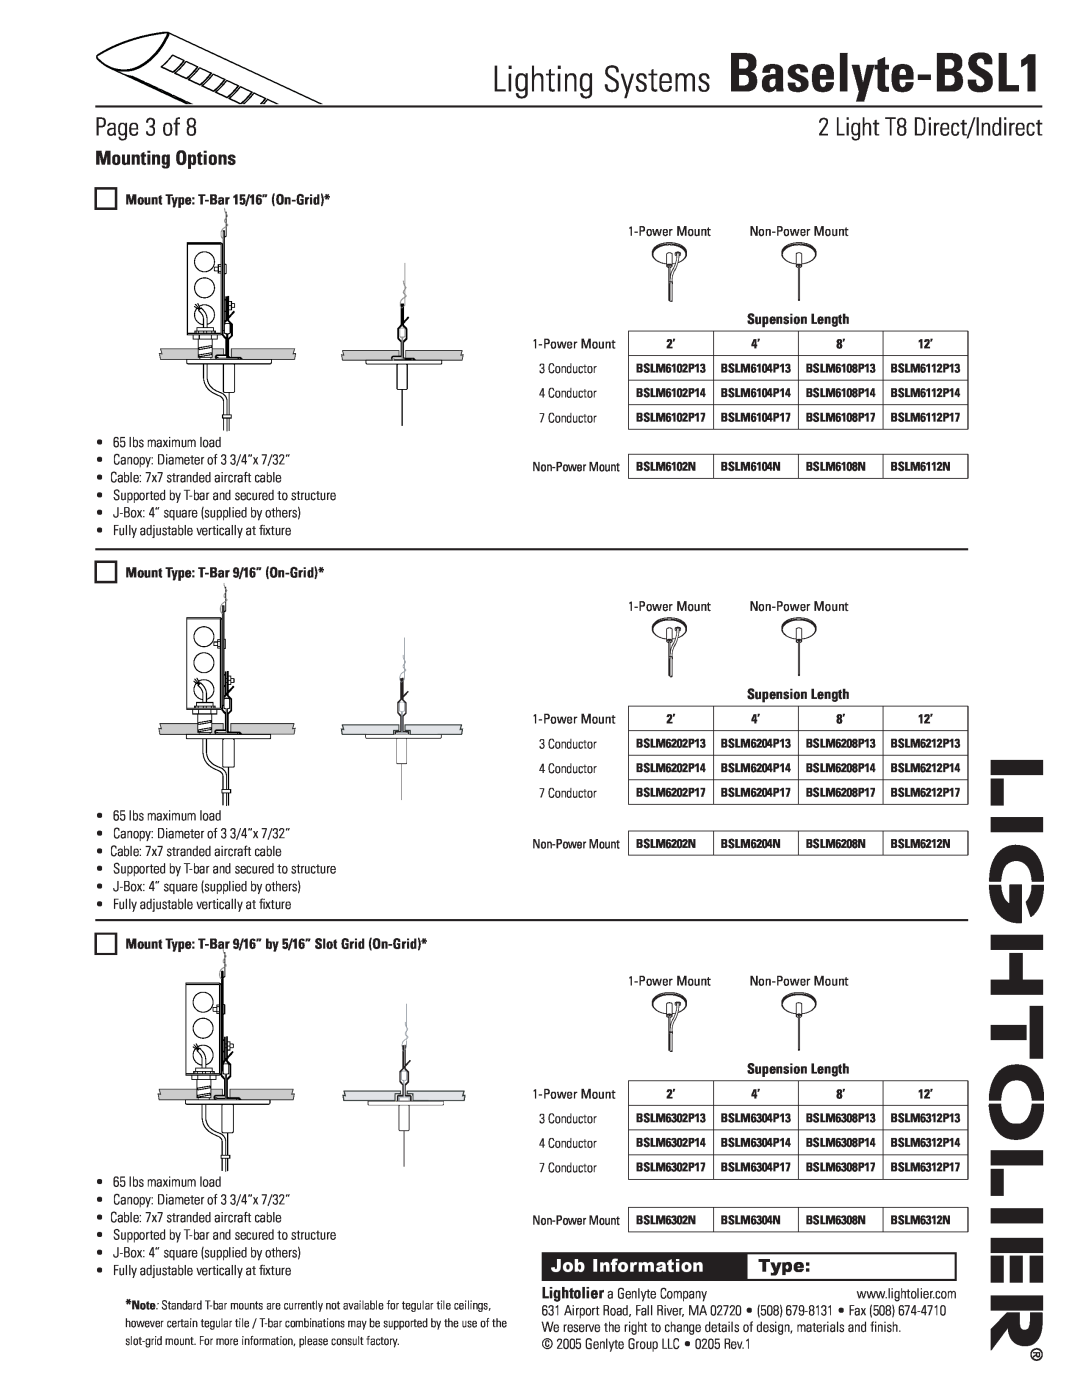 Lightolier Baselyte-BSL1 Mounting Options, Mount Type T-Bar15/16” On-Grid, Supension Length, Mount Type T-Bar9/16” On-Grid 